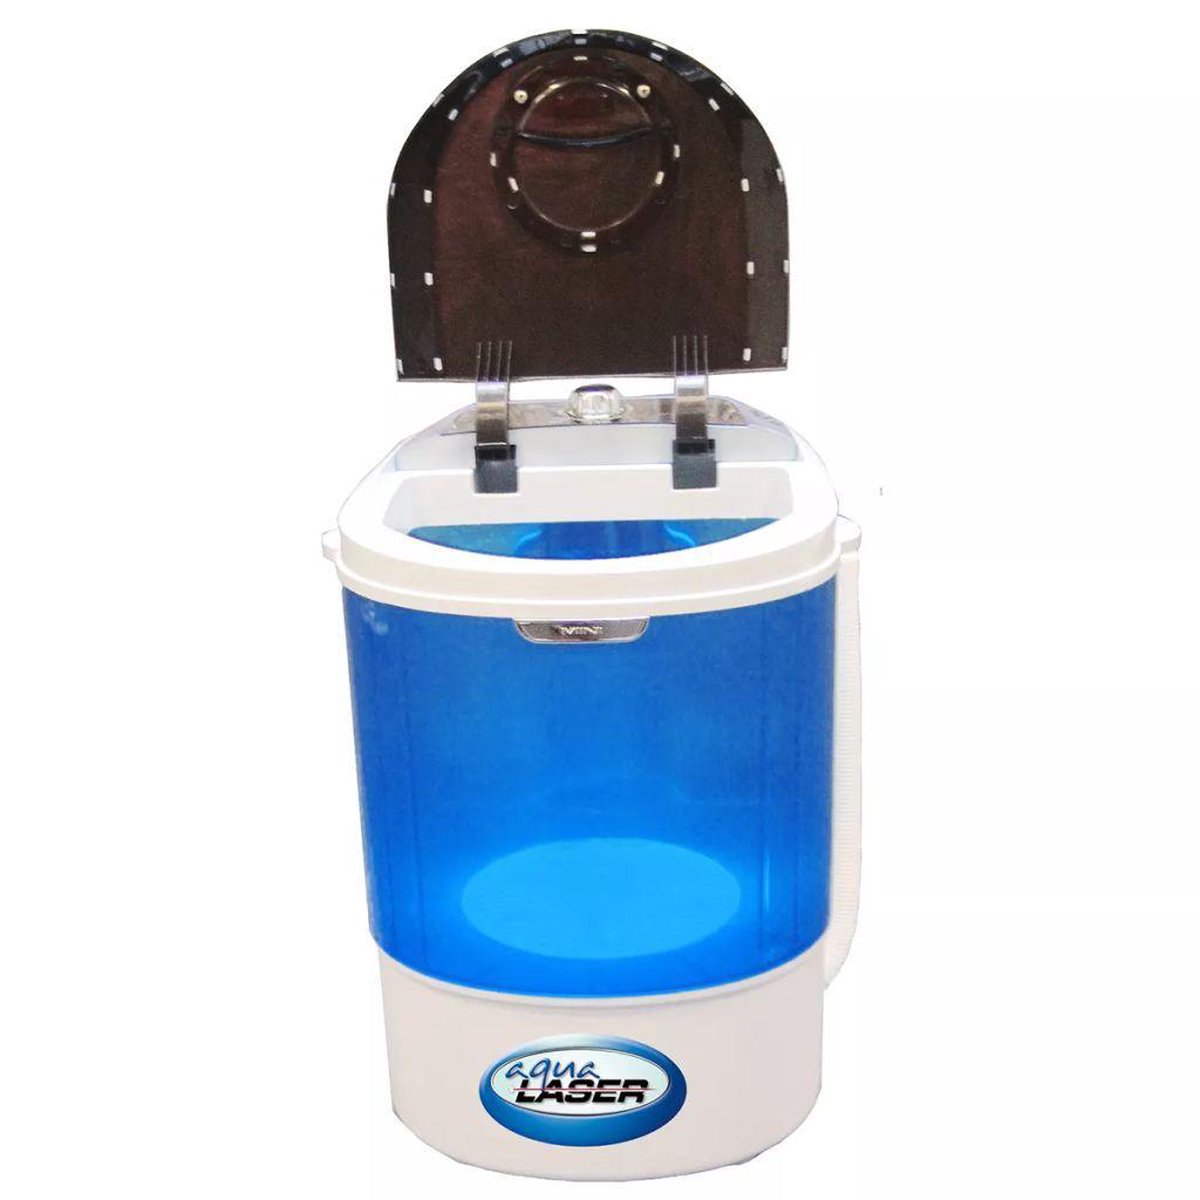 Aqua Laser mini wasmachine | bol.com